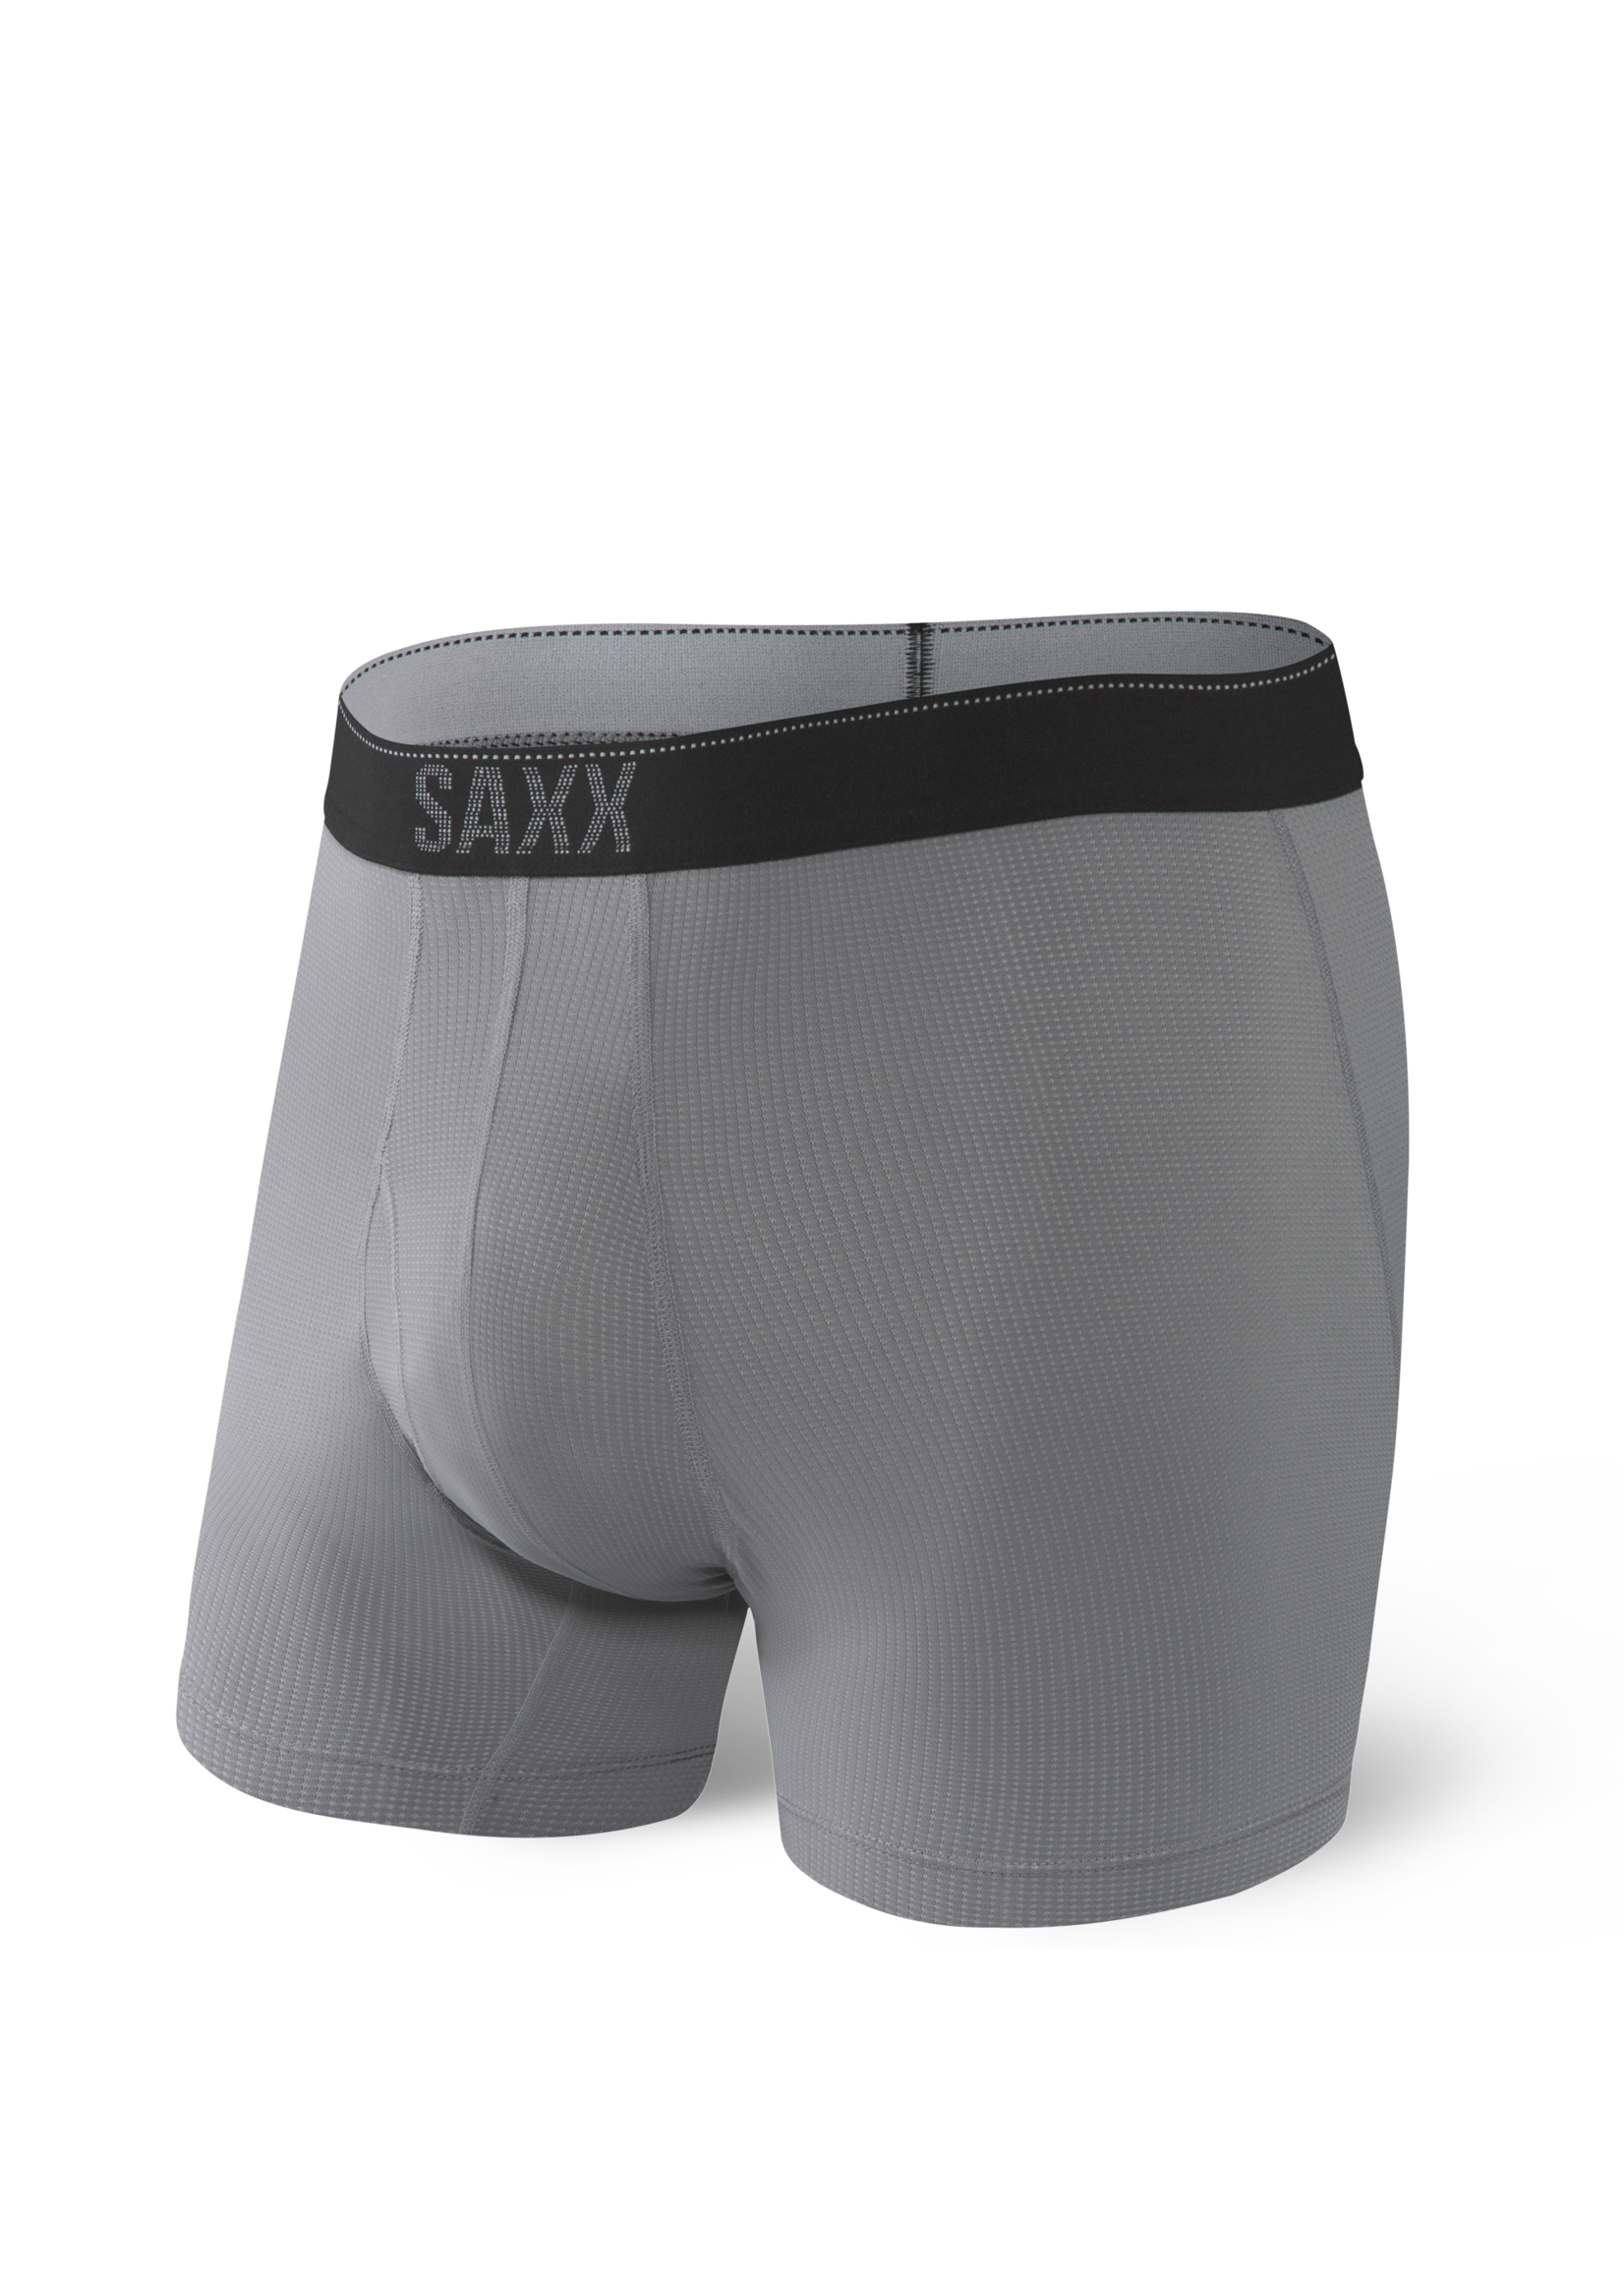 SAXX SAXX - Quest Boxer Brief  2PK (Black / Dark Charcoal)